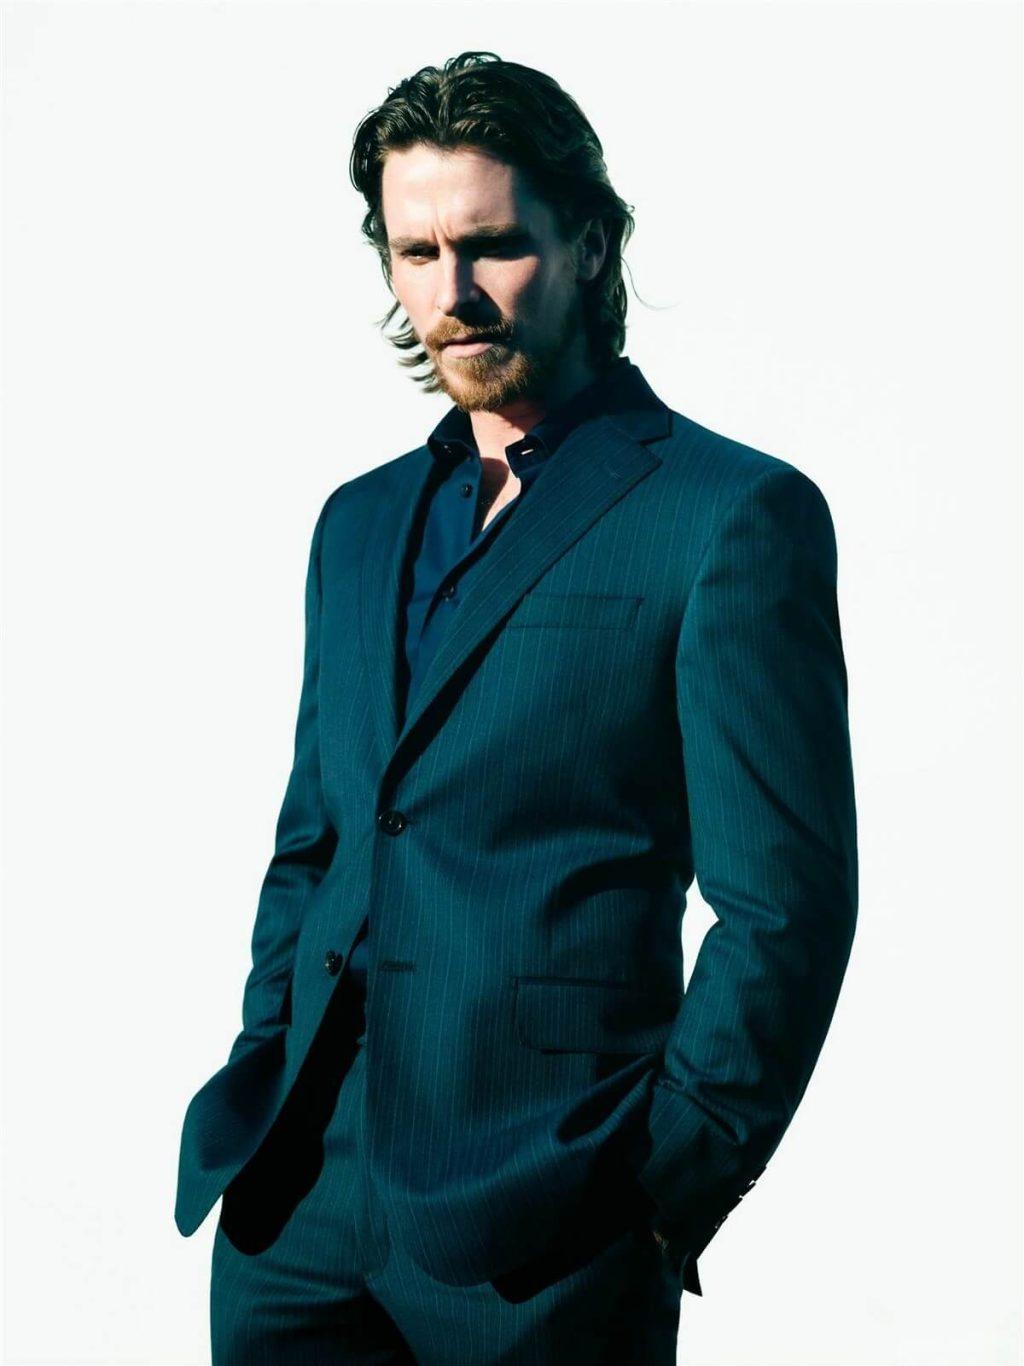 Christian Bale GQ March 2007 02